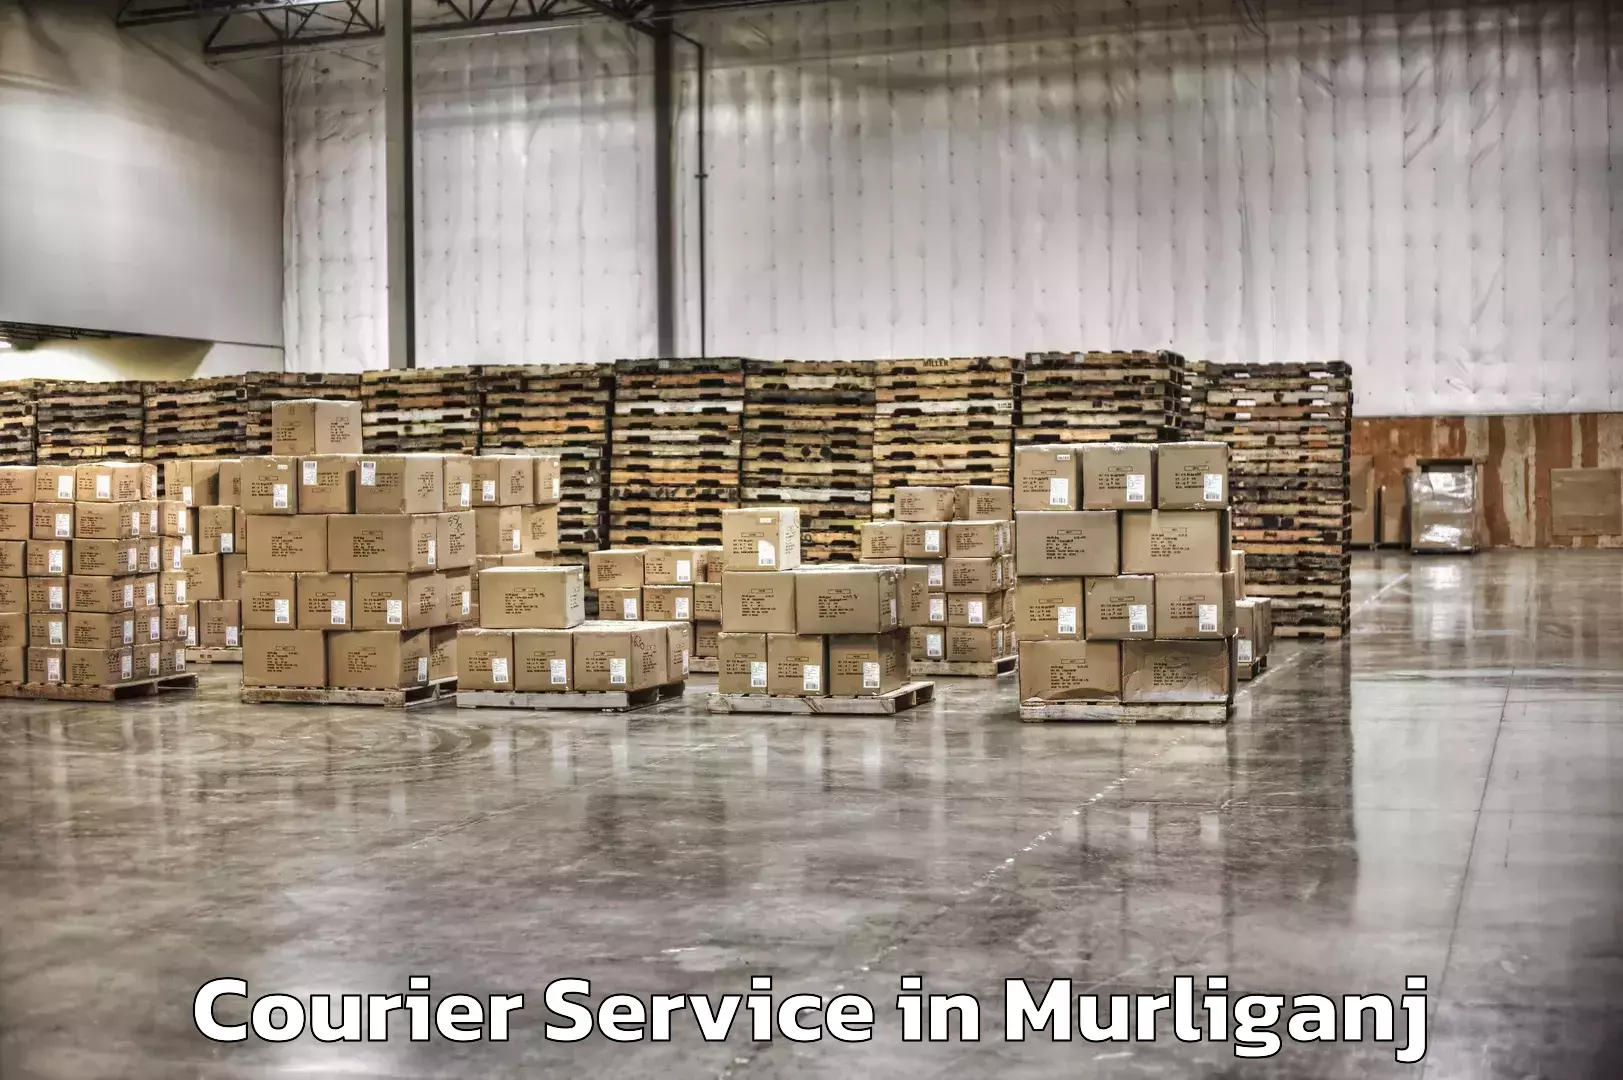 Customer-focused courier in Murliganj